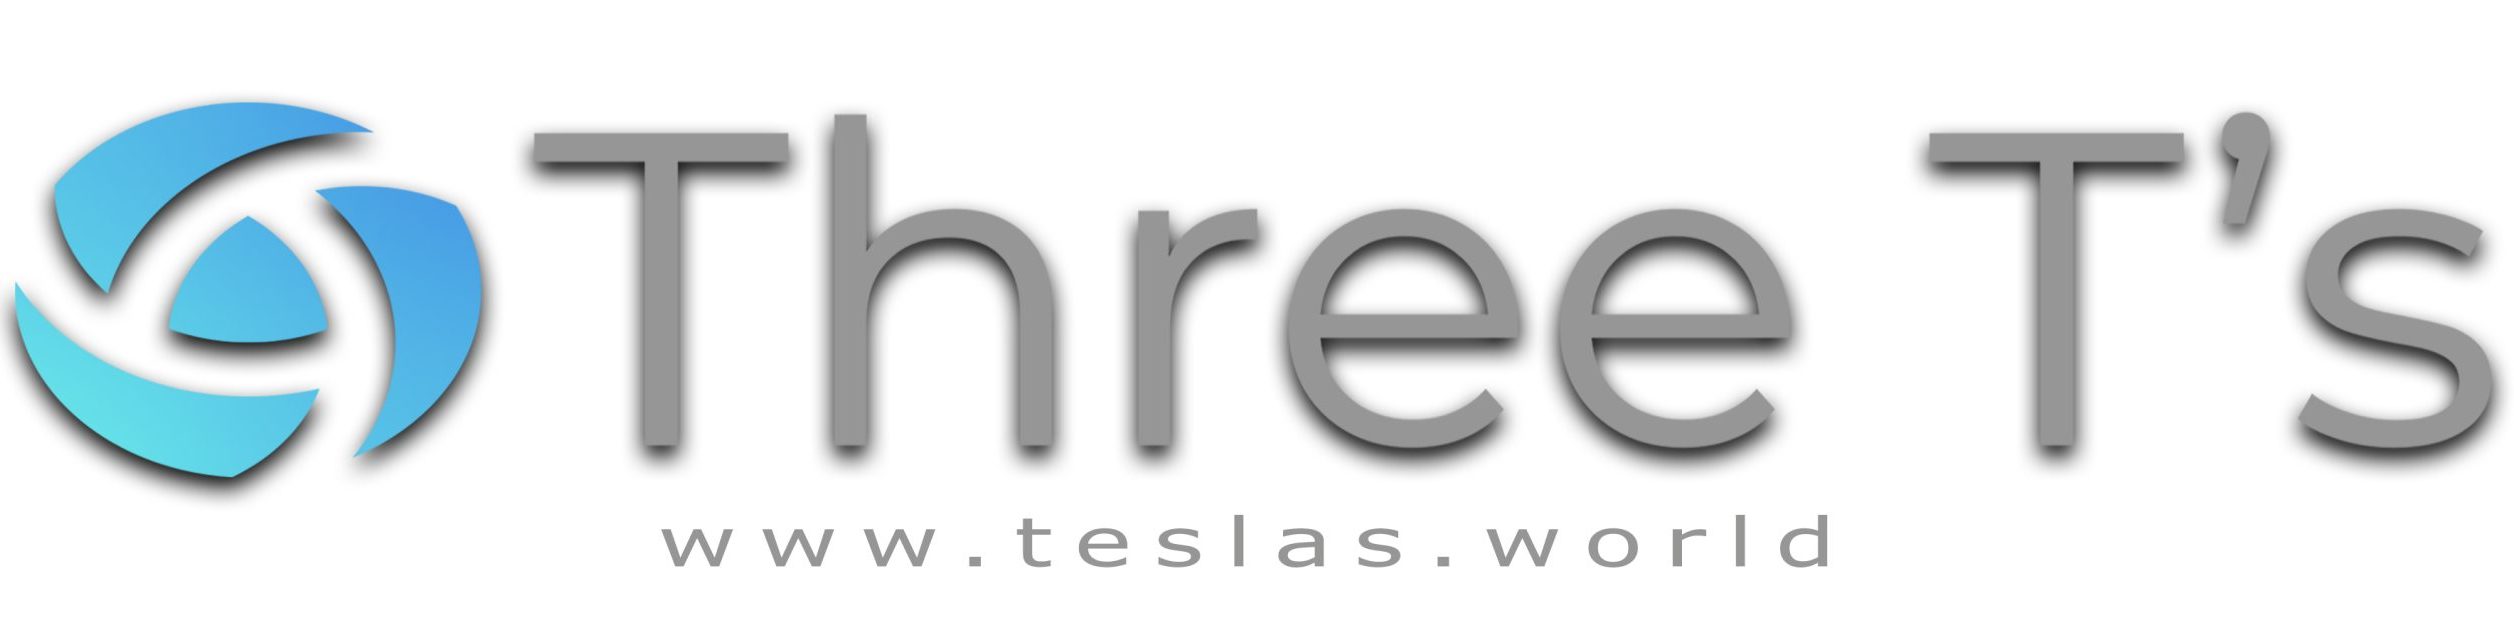 3 T's Logo Teslas